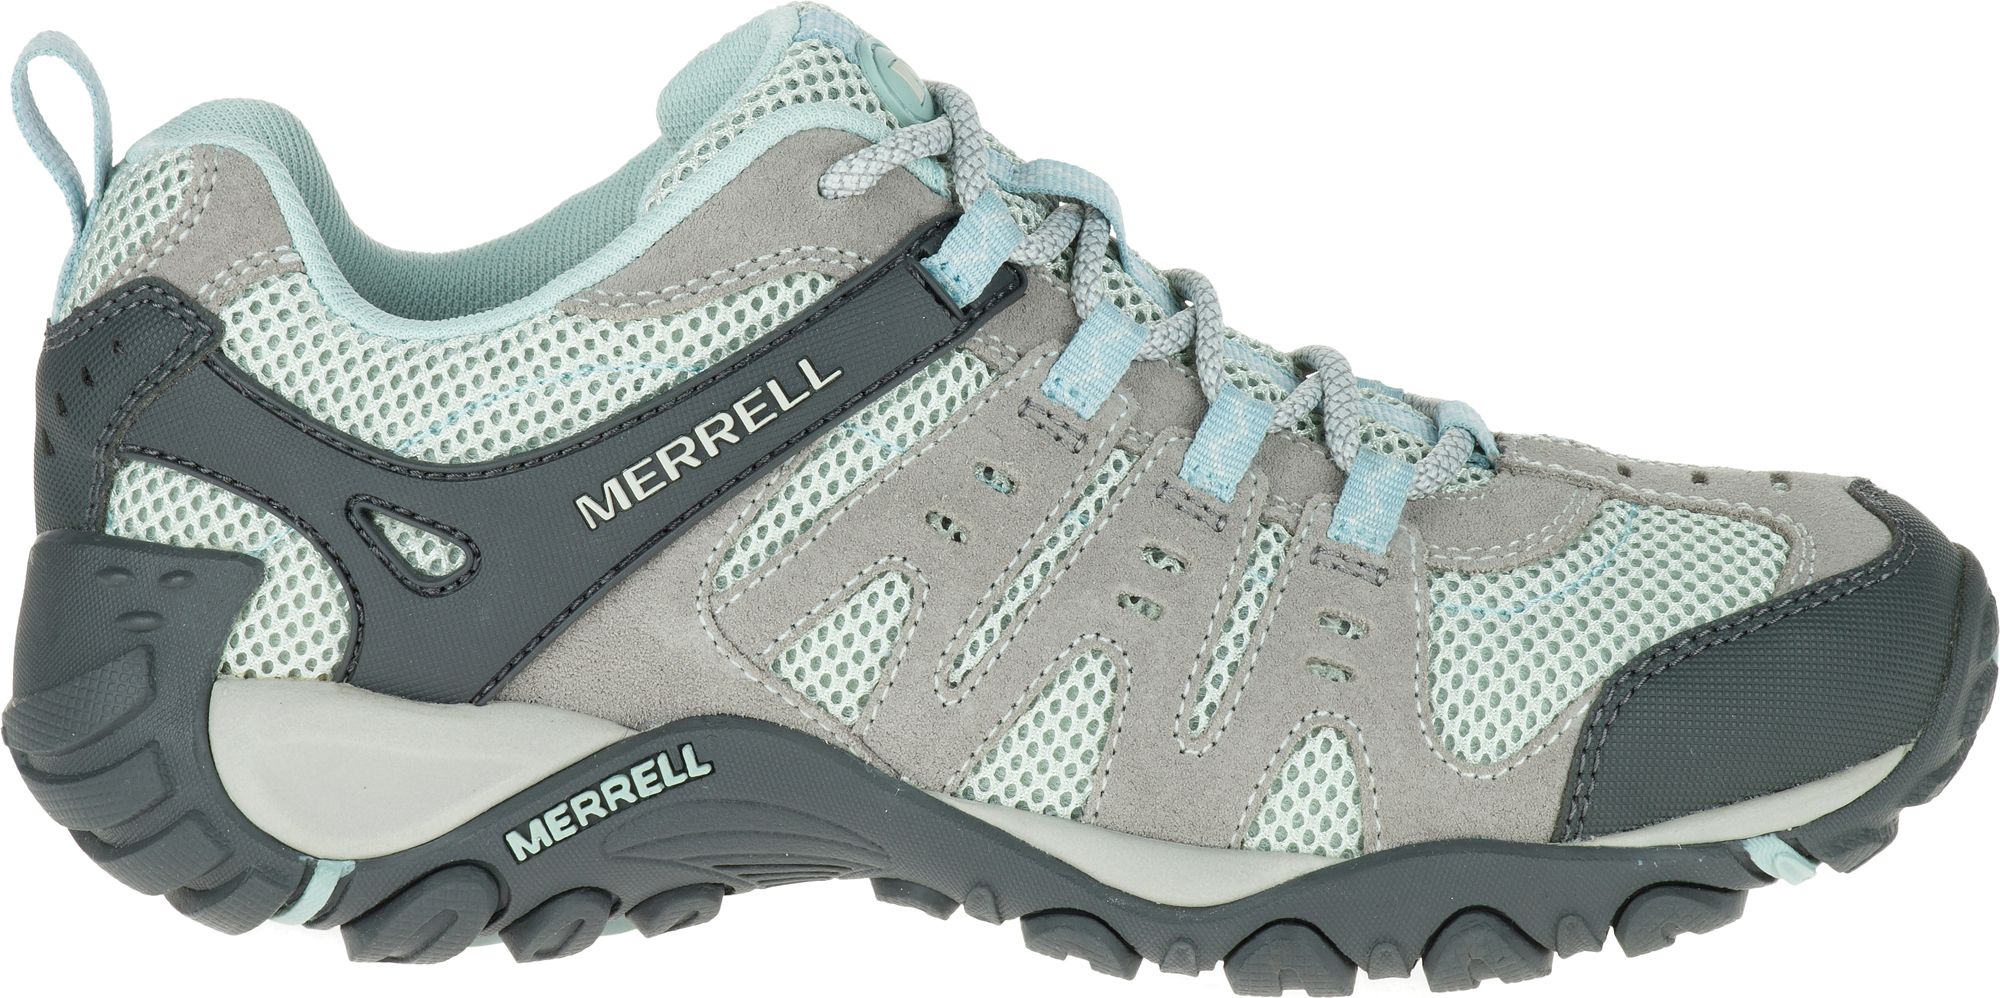 merrell shoes hiking